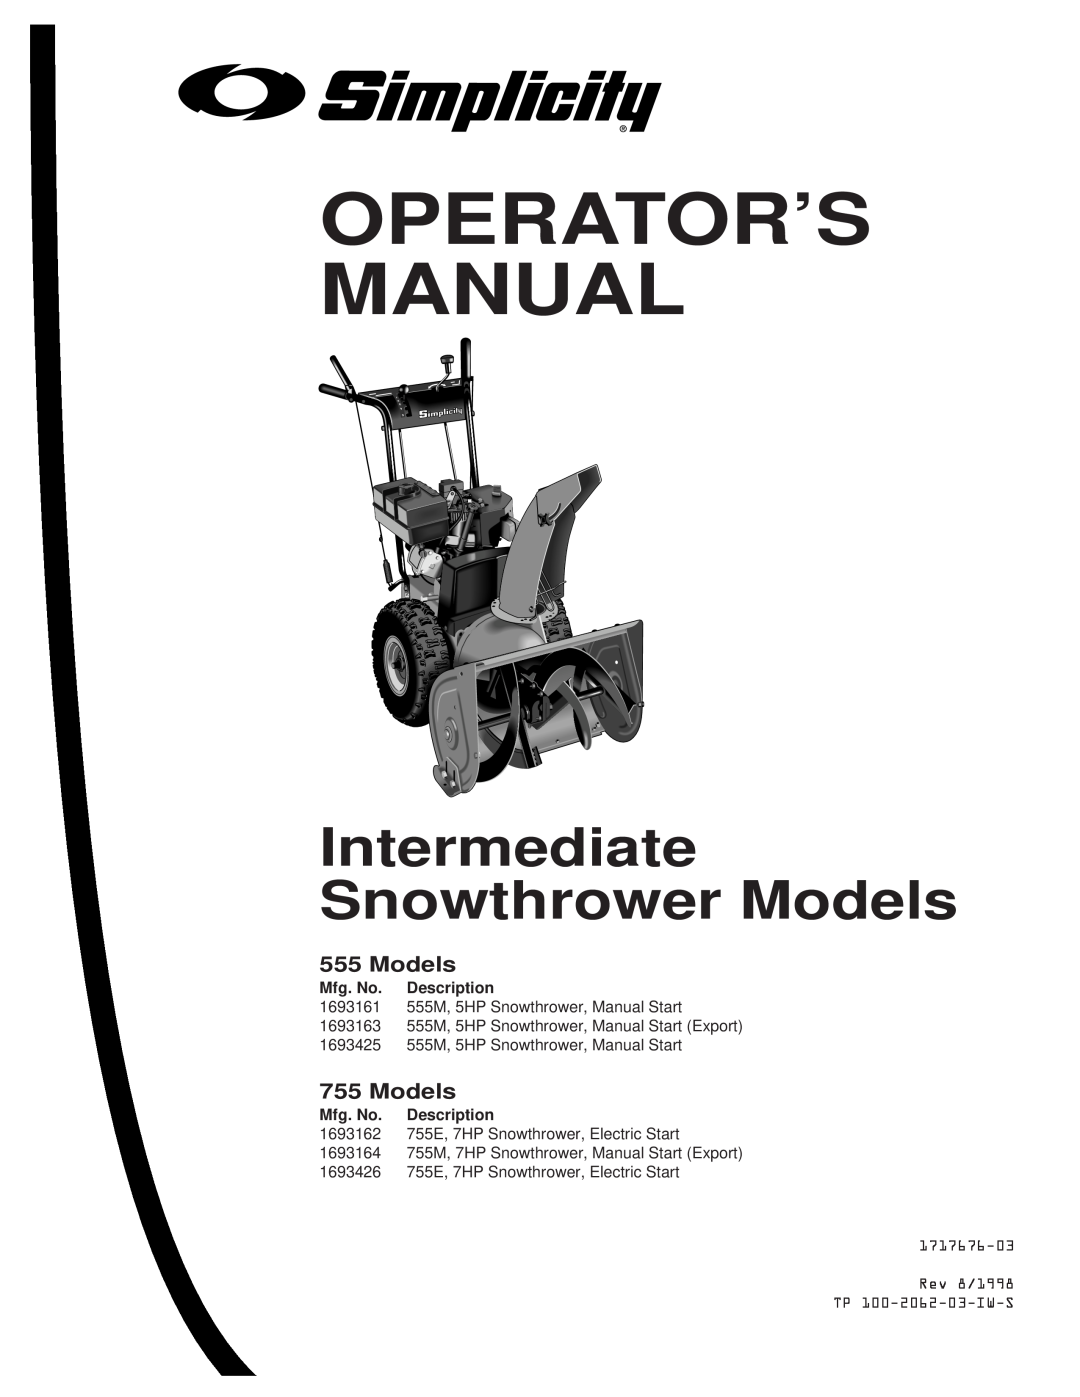 Simplicity 1693161 555M, 1693426 755E, 1693425 555M, 1693164 755M Operator’S Manual, Intermediate Snowthrower Models 